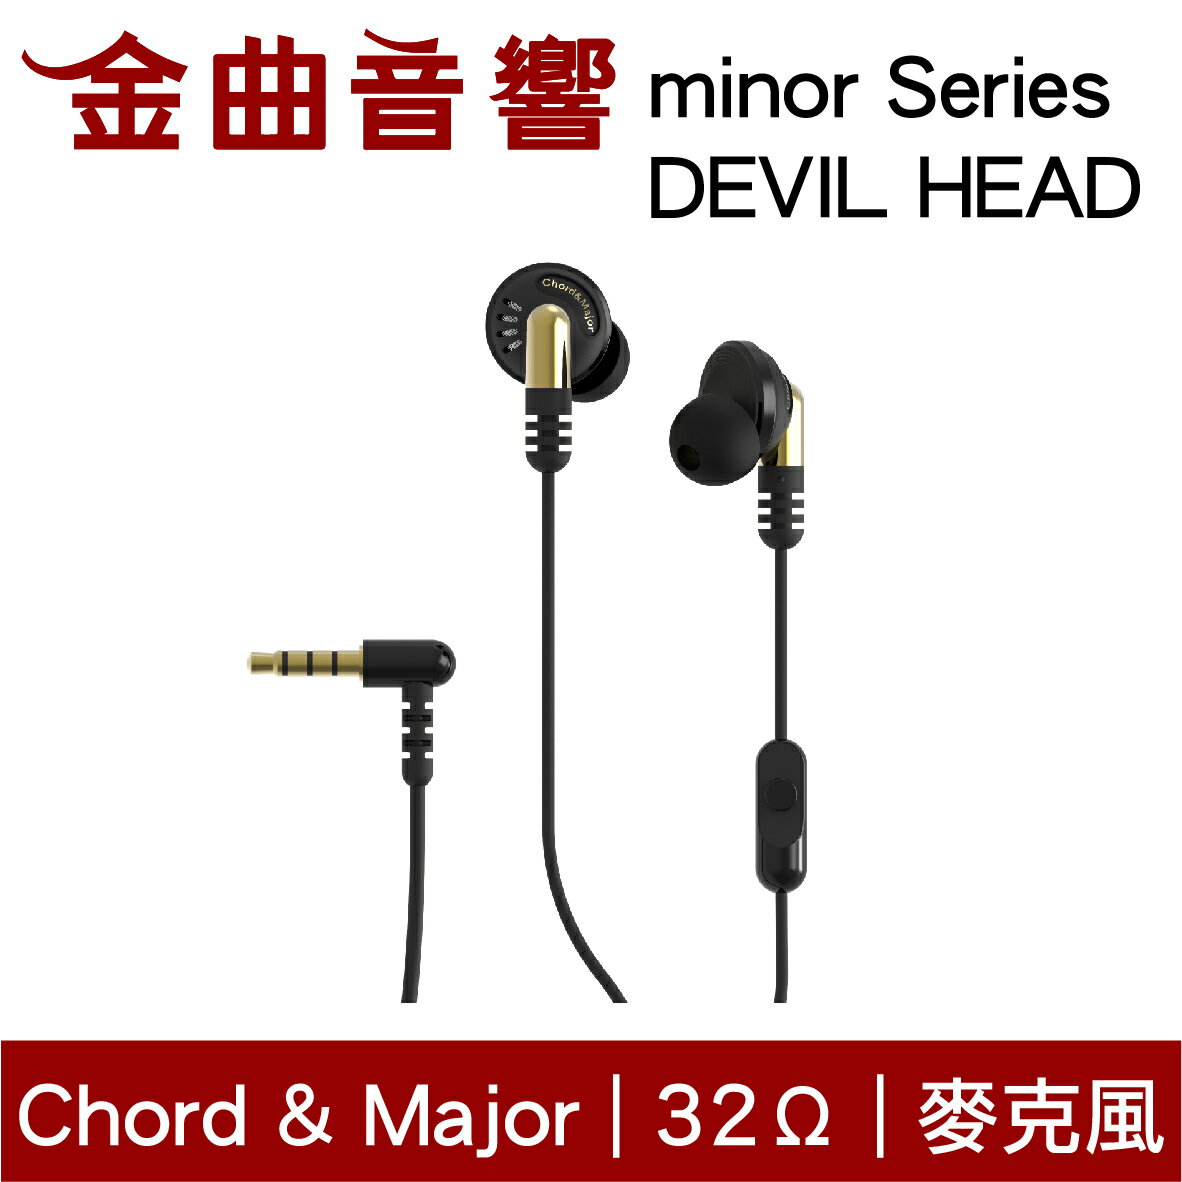 Chord & Major 小調性耳機 minor series DEVIL HEAD惡魔頭 耳道式 耳機 | 金曲音響